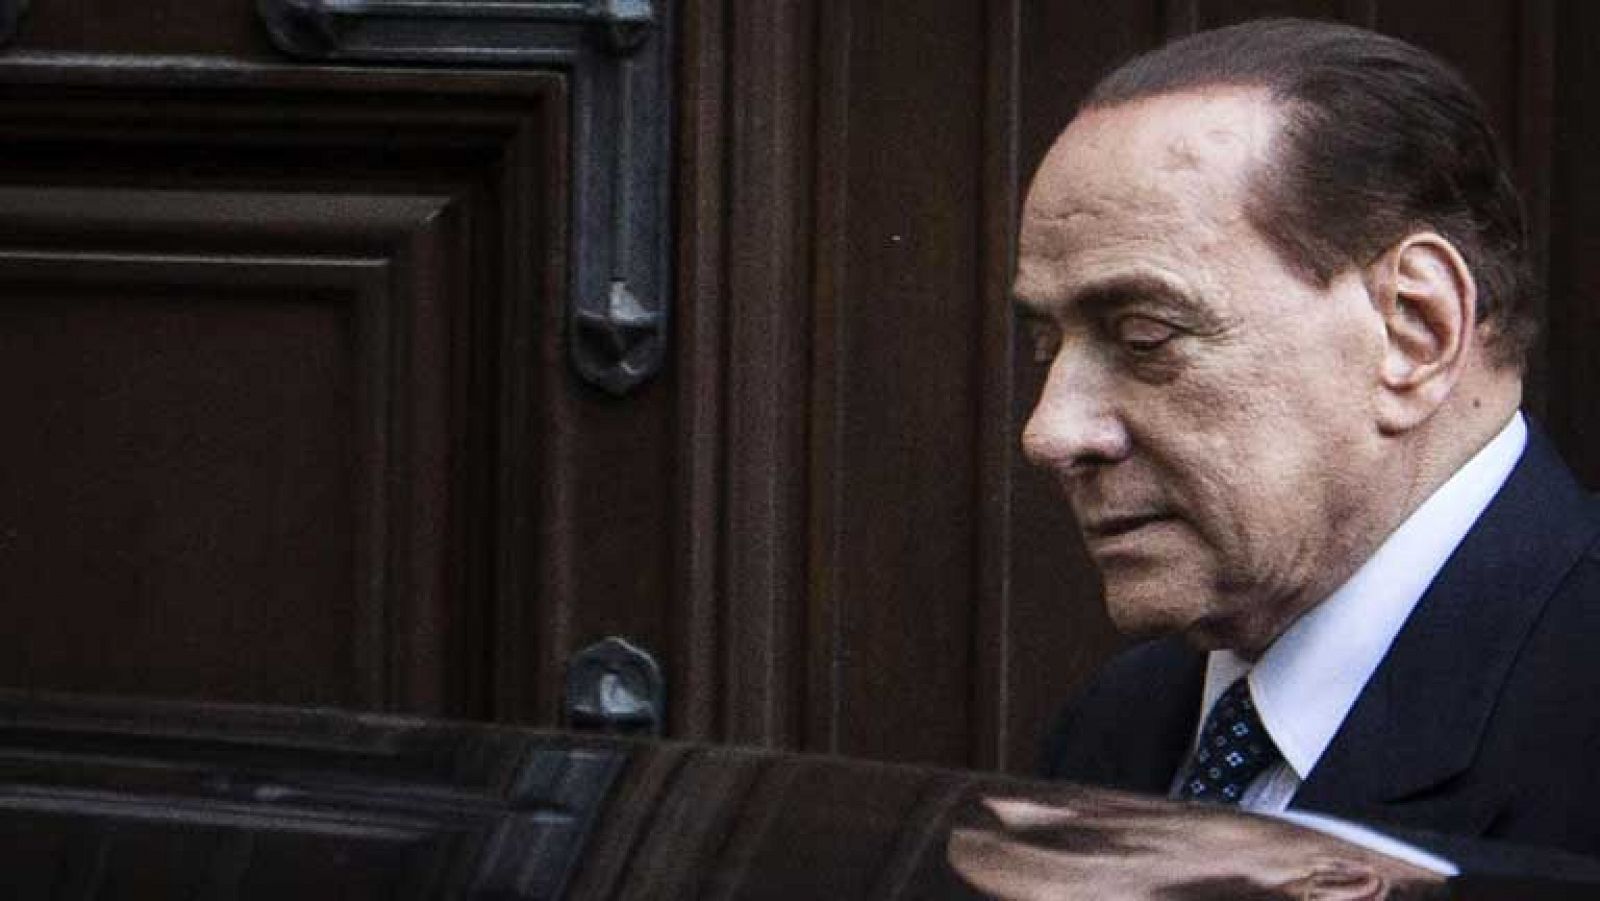 Entrevista a Mónica Uriel, corresponsal de la agencia italiana Ansa, sobre el futuro de Berlusconi